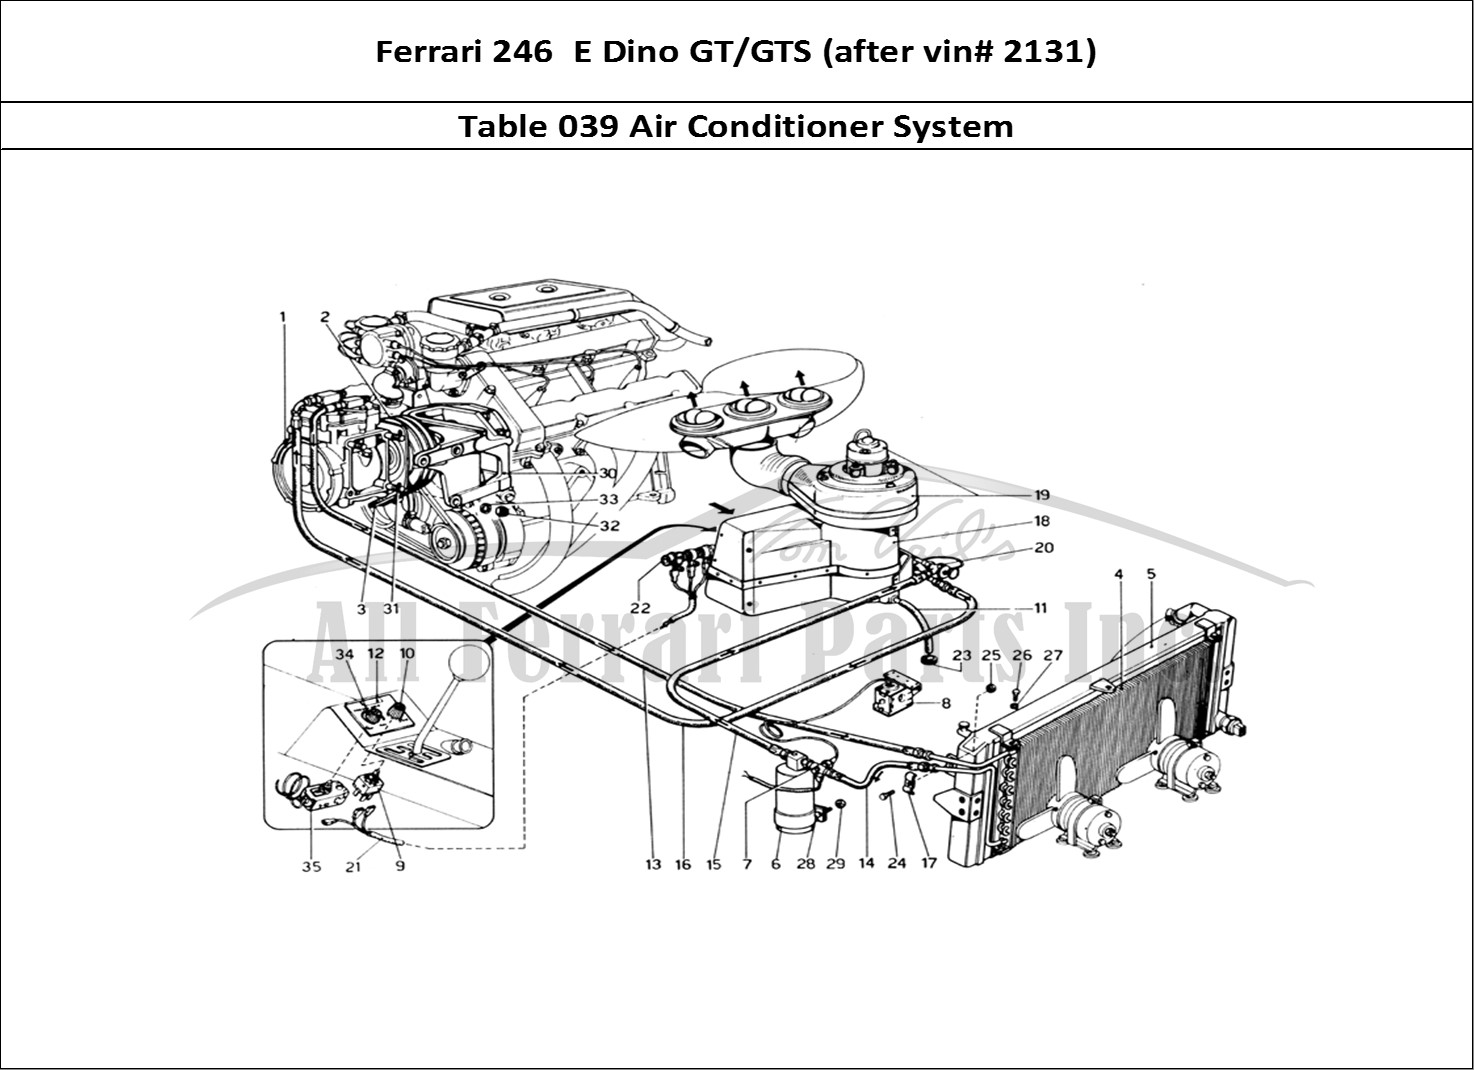 Ferrari Parts Ferrari 246 Dino (1975) Page 039 Air Conditioning System